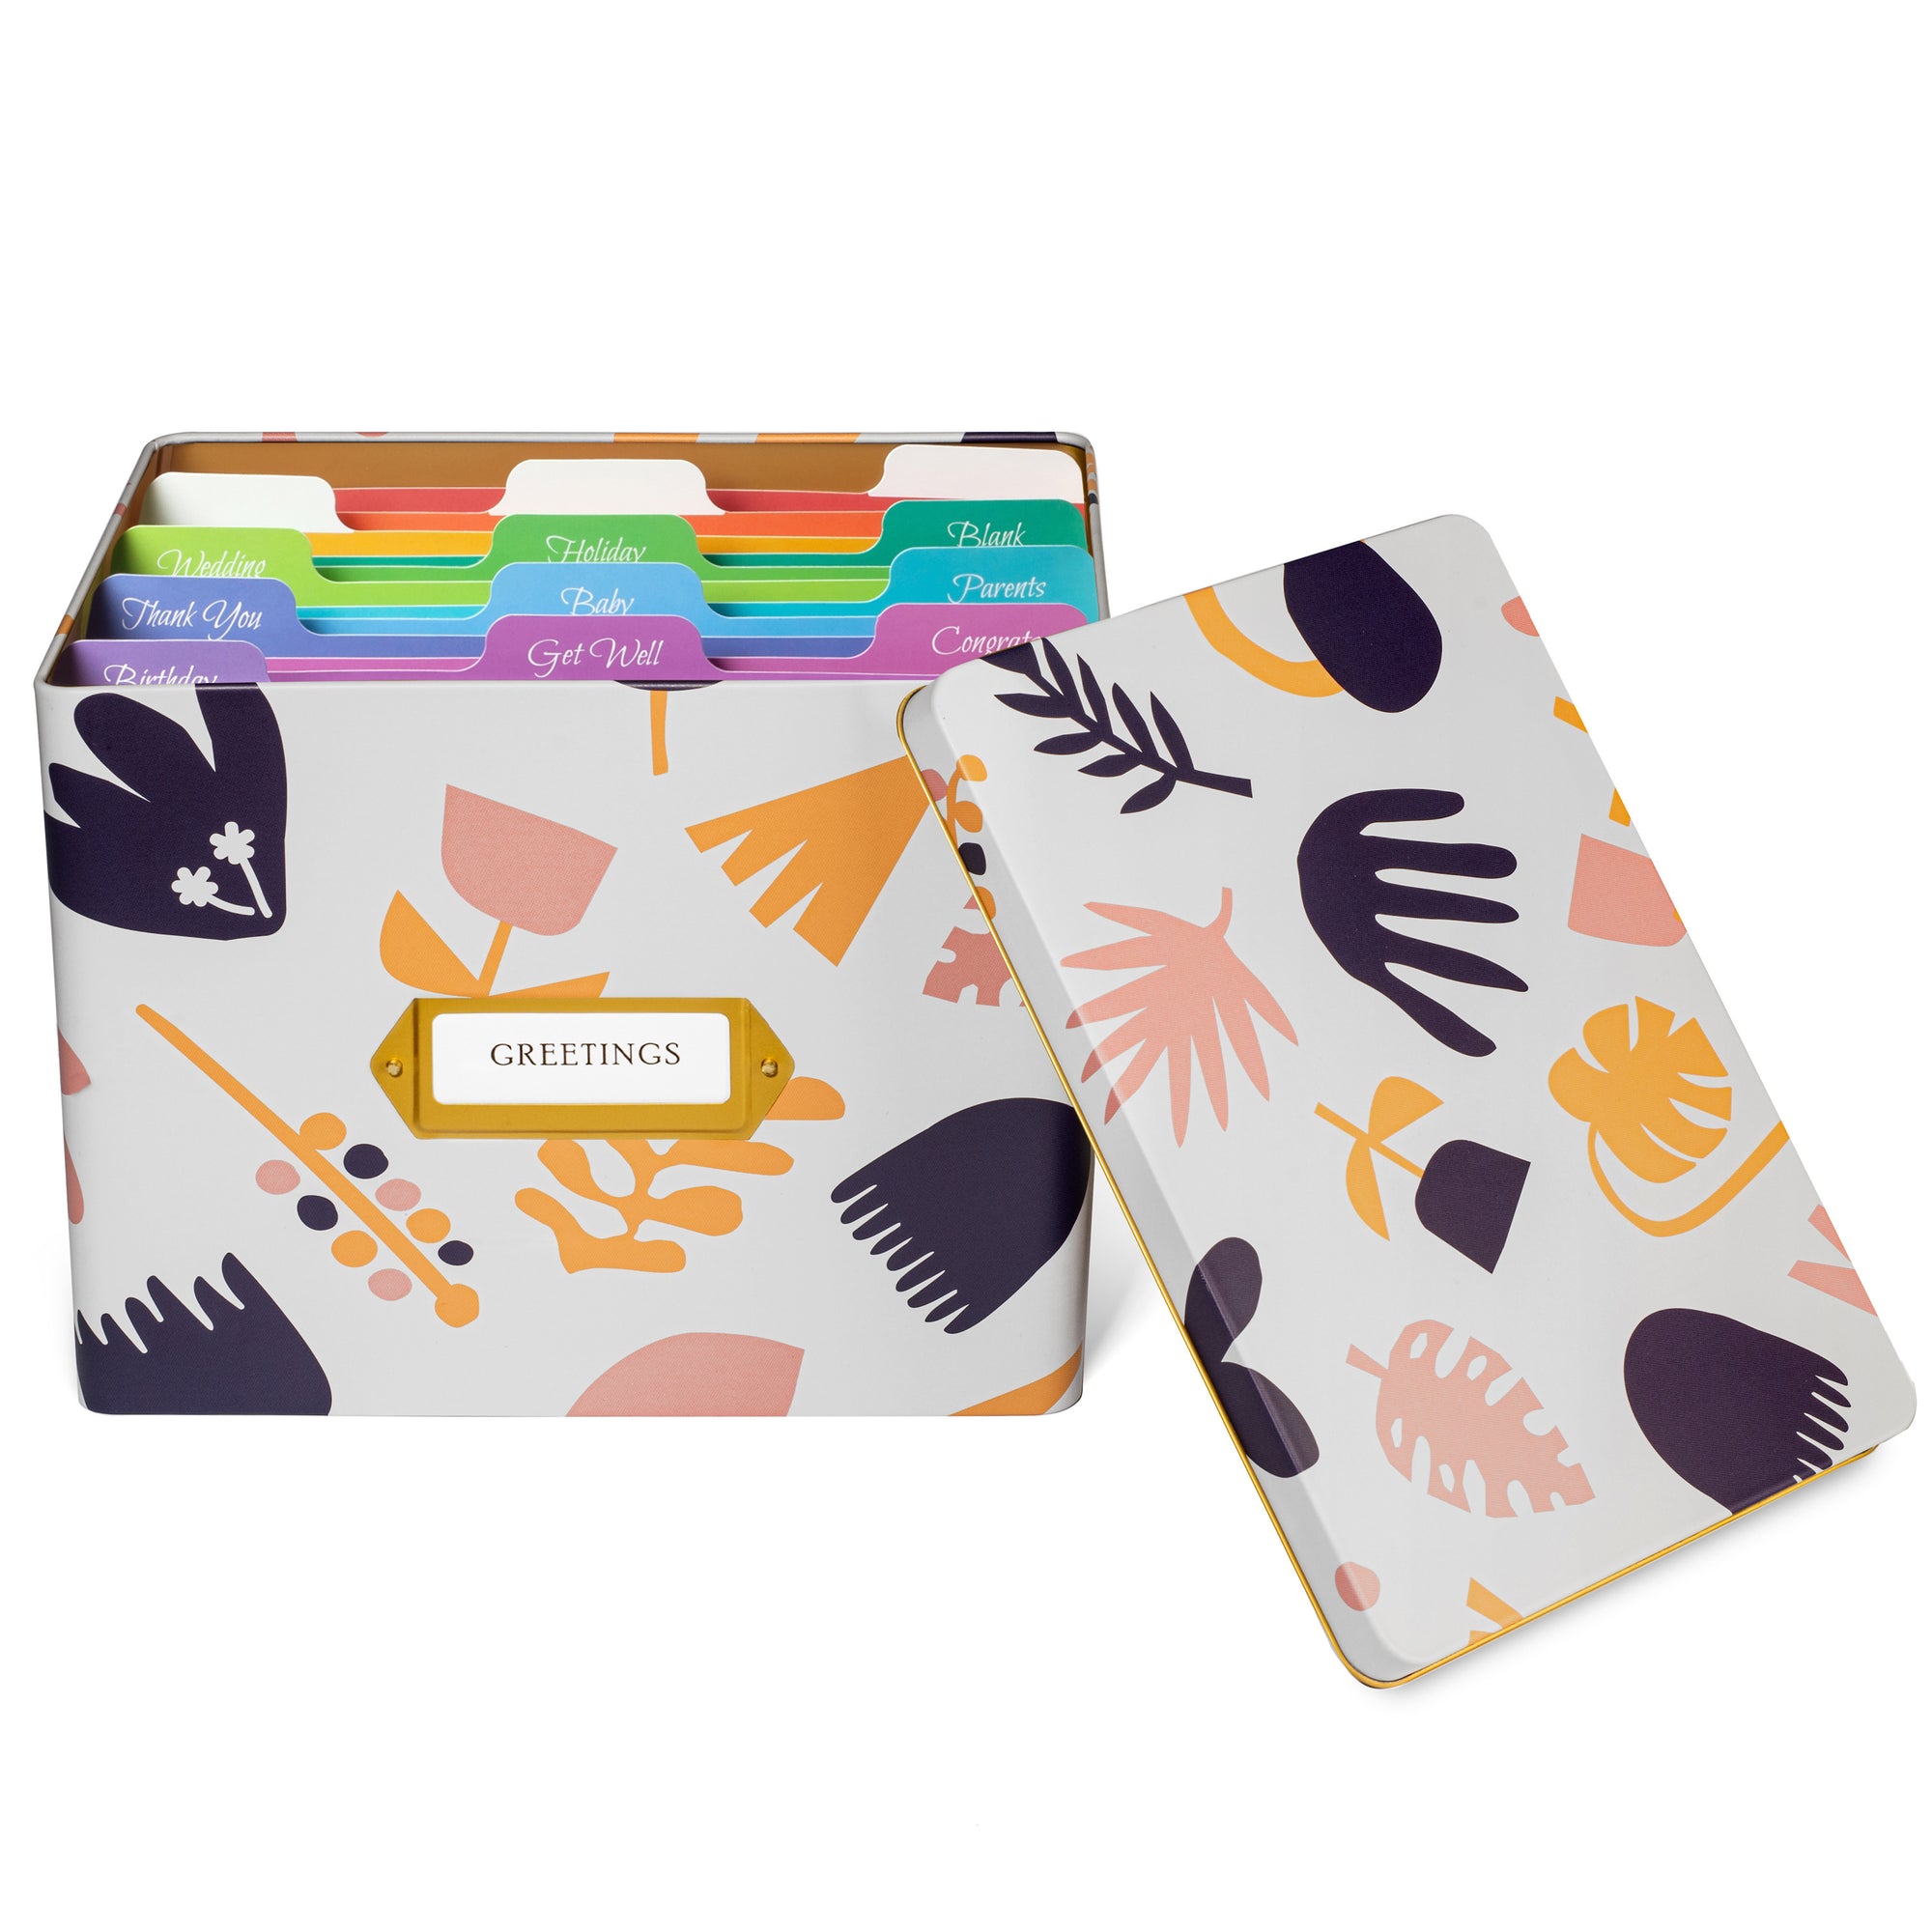  Jot & Mark Greeting Card Organizer Box Set  Decorative Recipe  Tin Box, Tab Dividers, Matching Greeting Cards and Envelopes (Indigo  Leaves) : Office Products